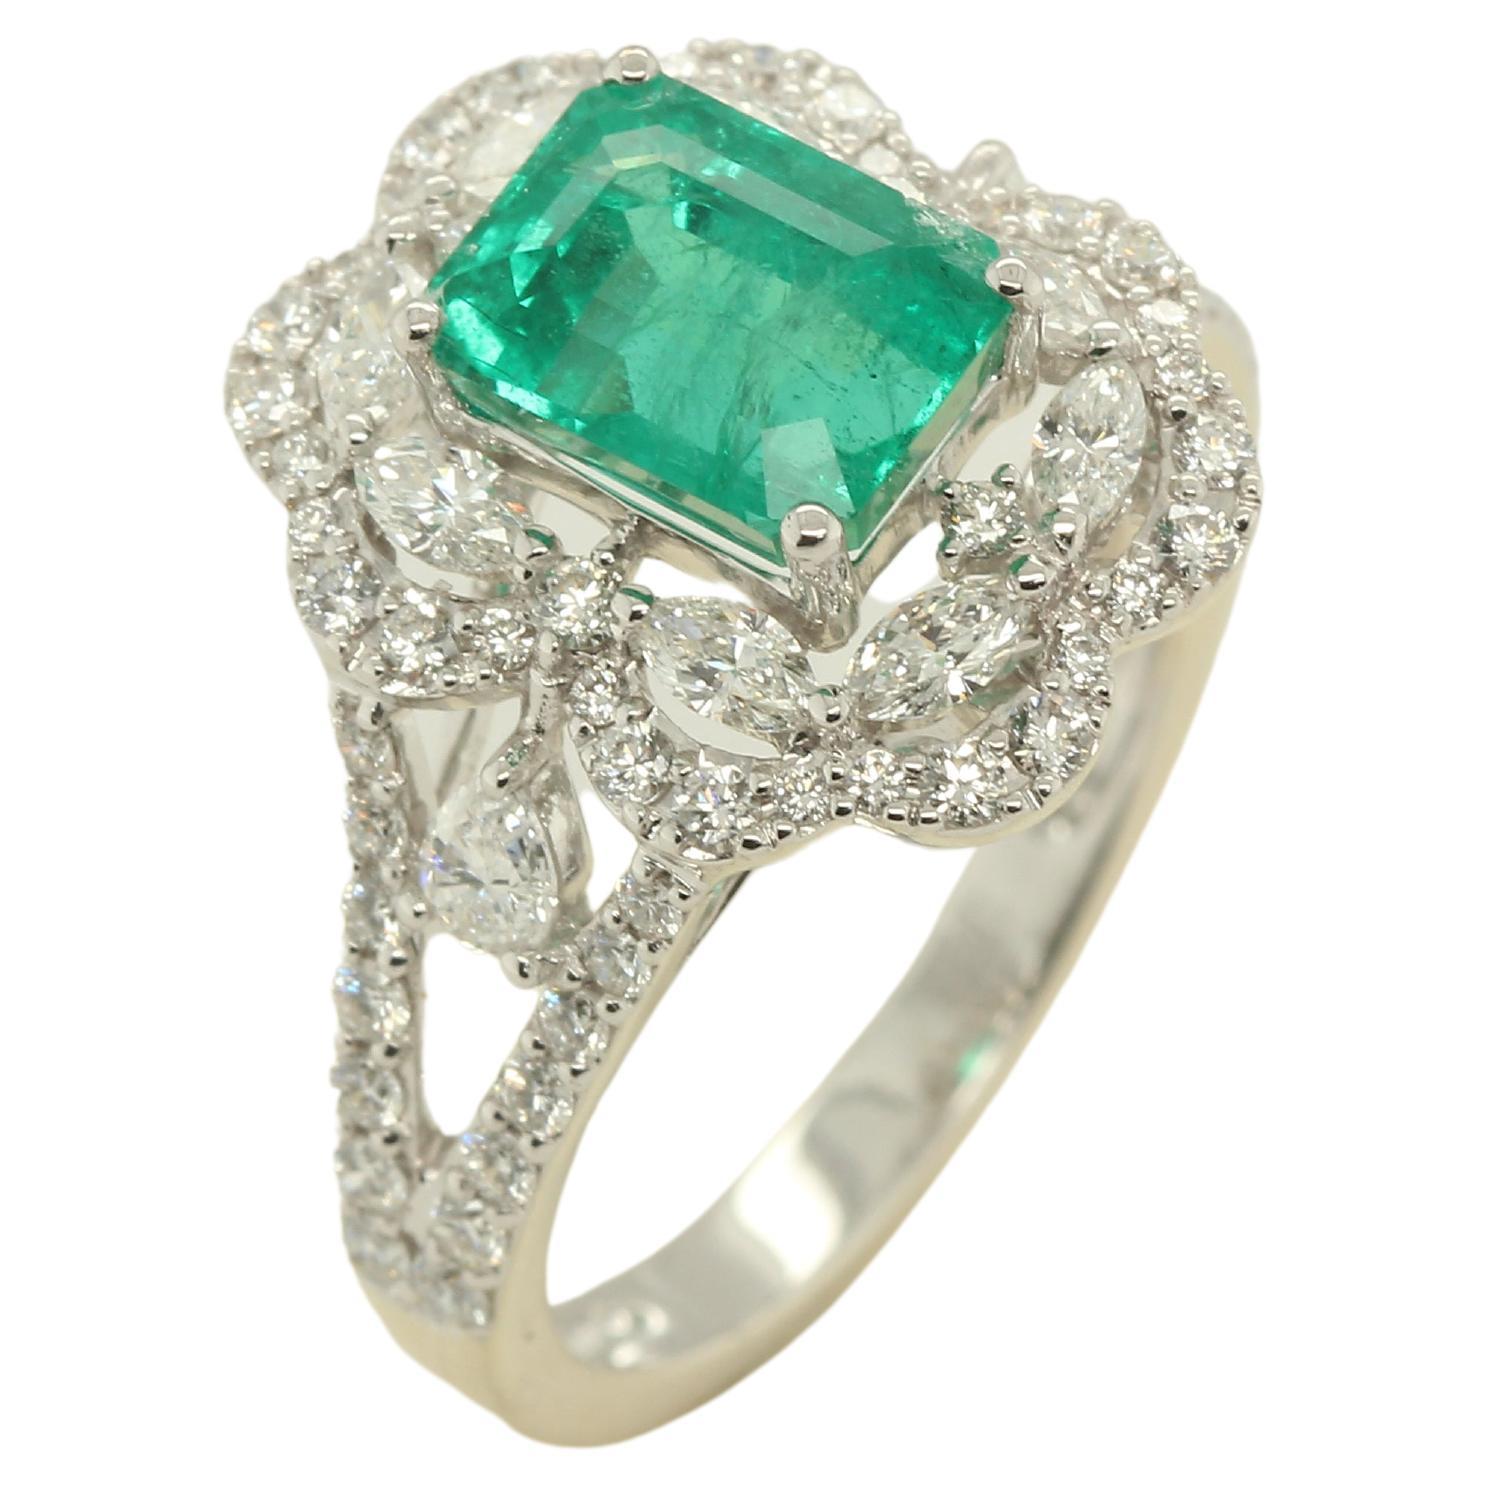 2.05 Carat Emerald and Diamond Ring in 18 Karat Gold